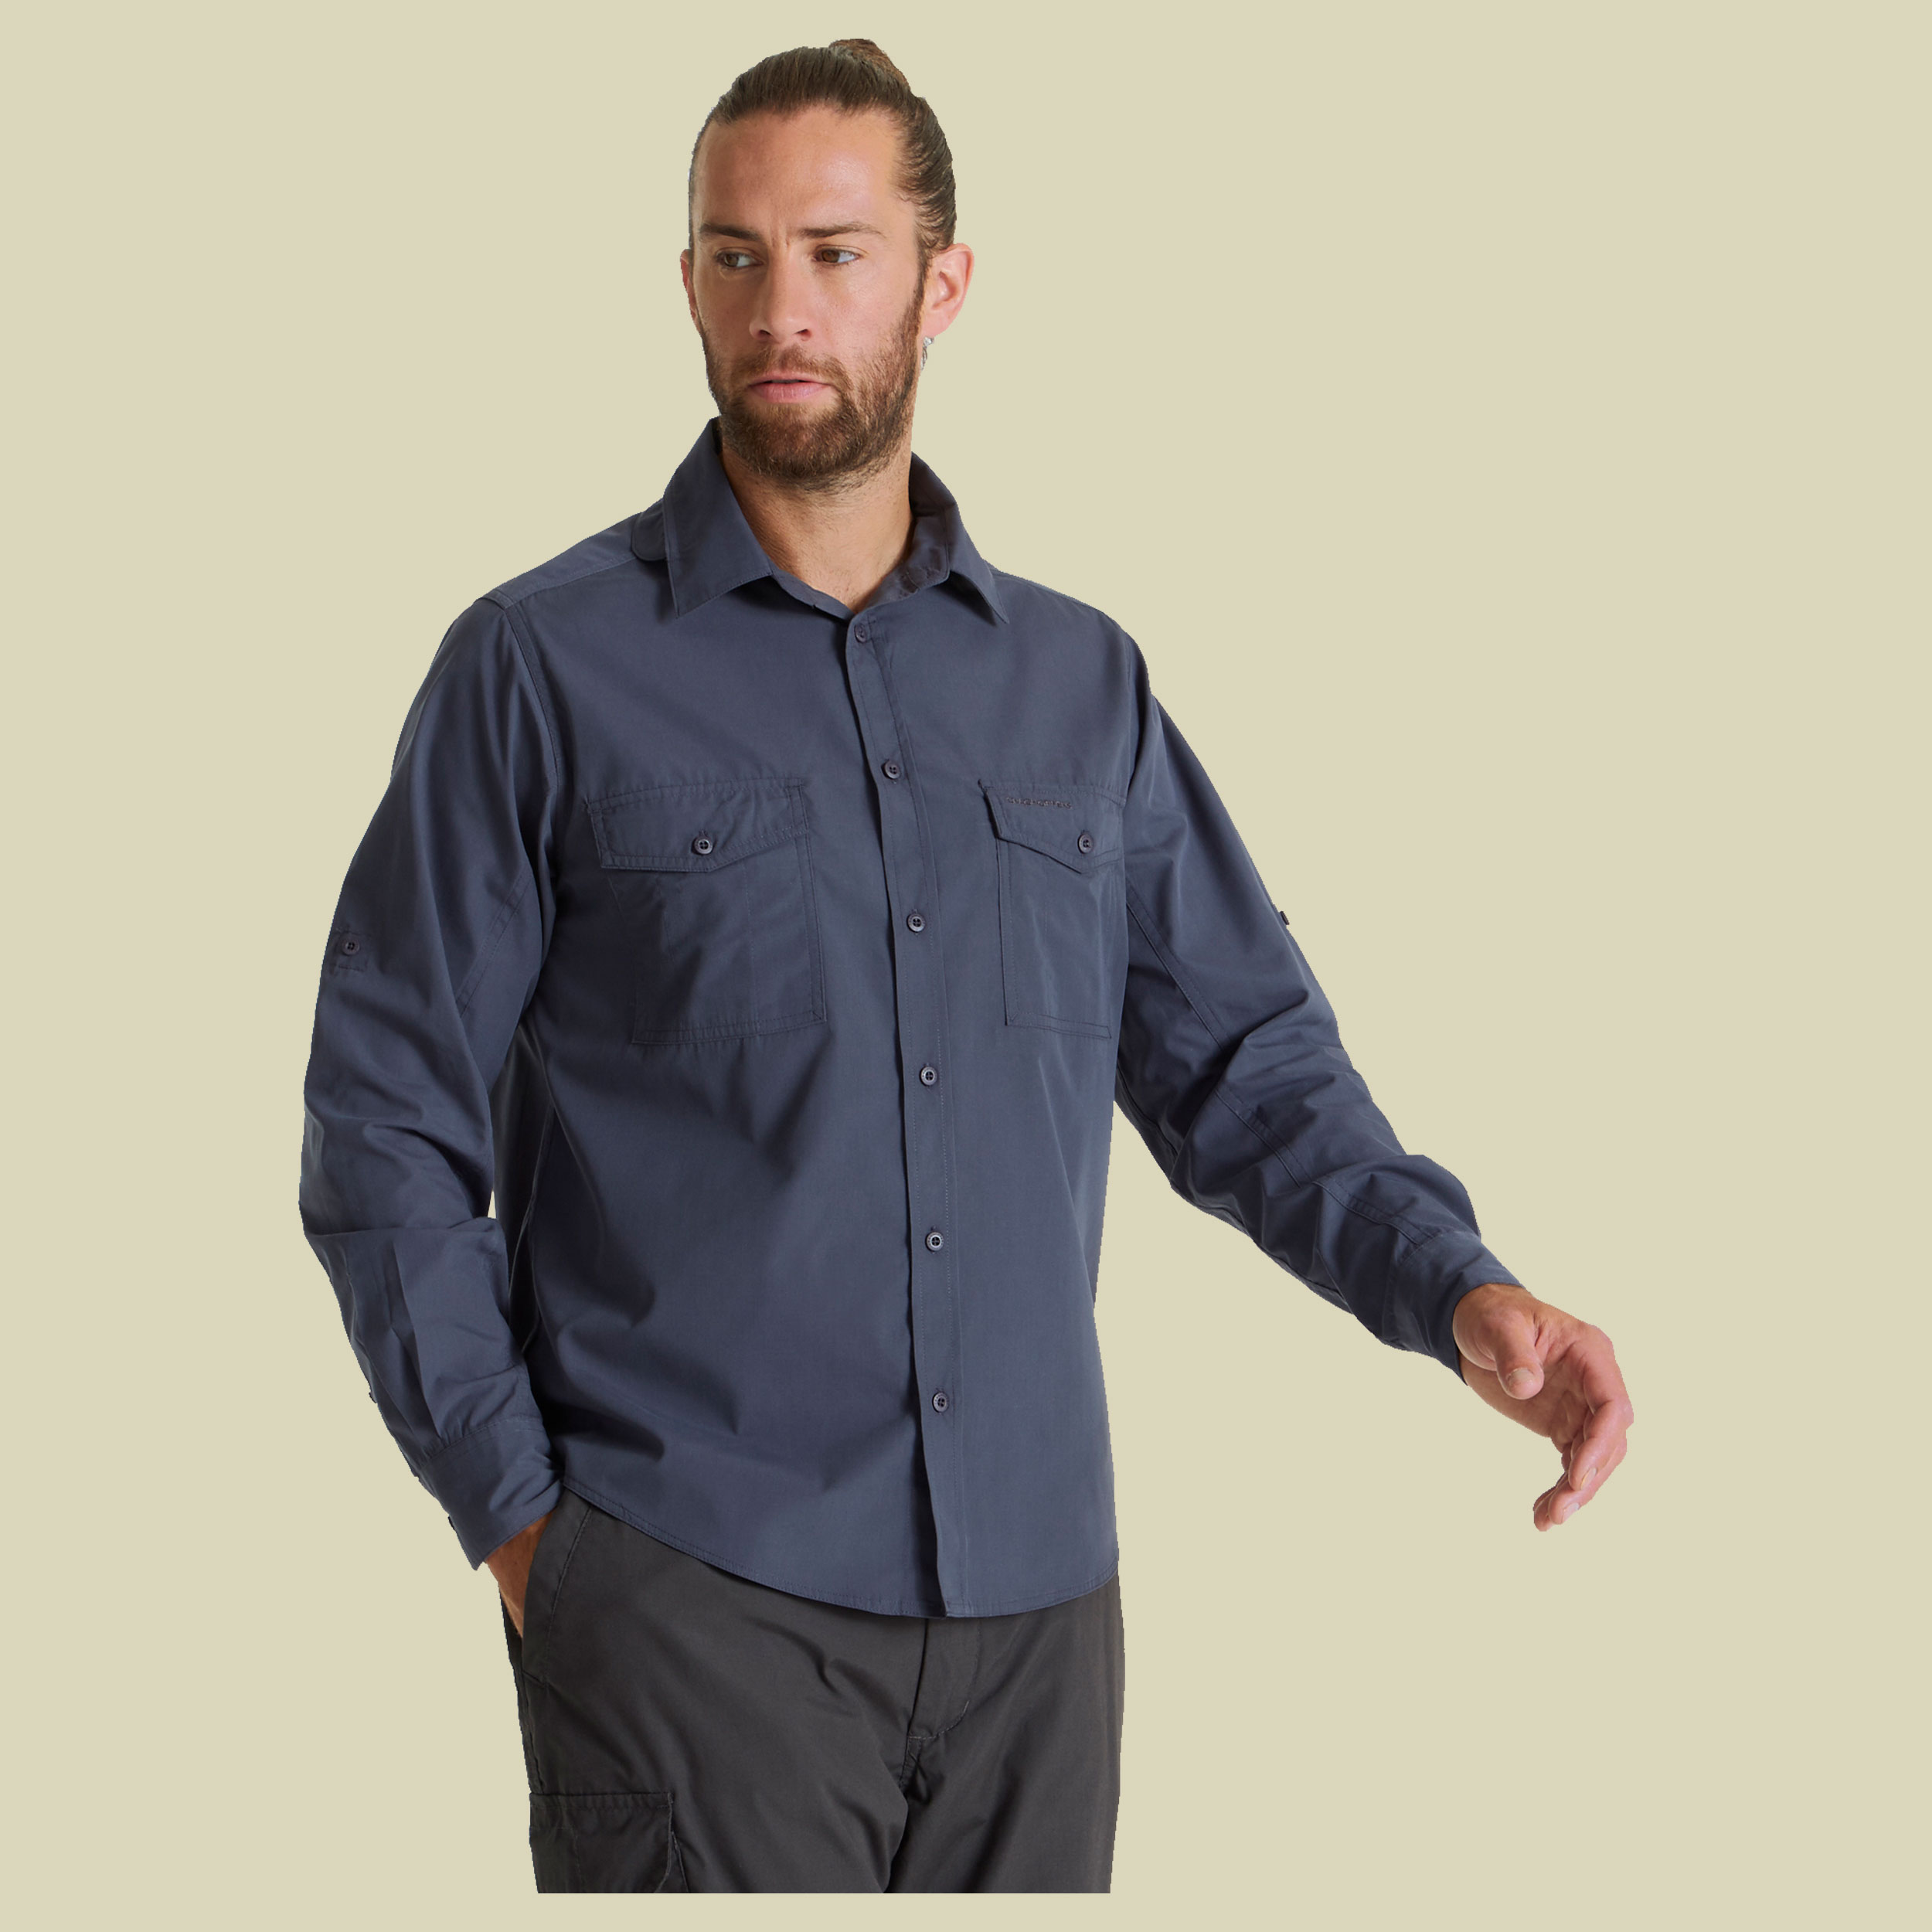 Kiwi Long Sleeved Shirt Men blau S - ombre blue